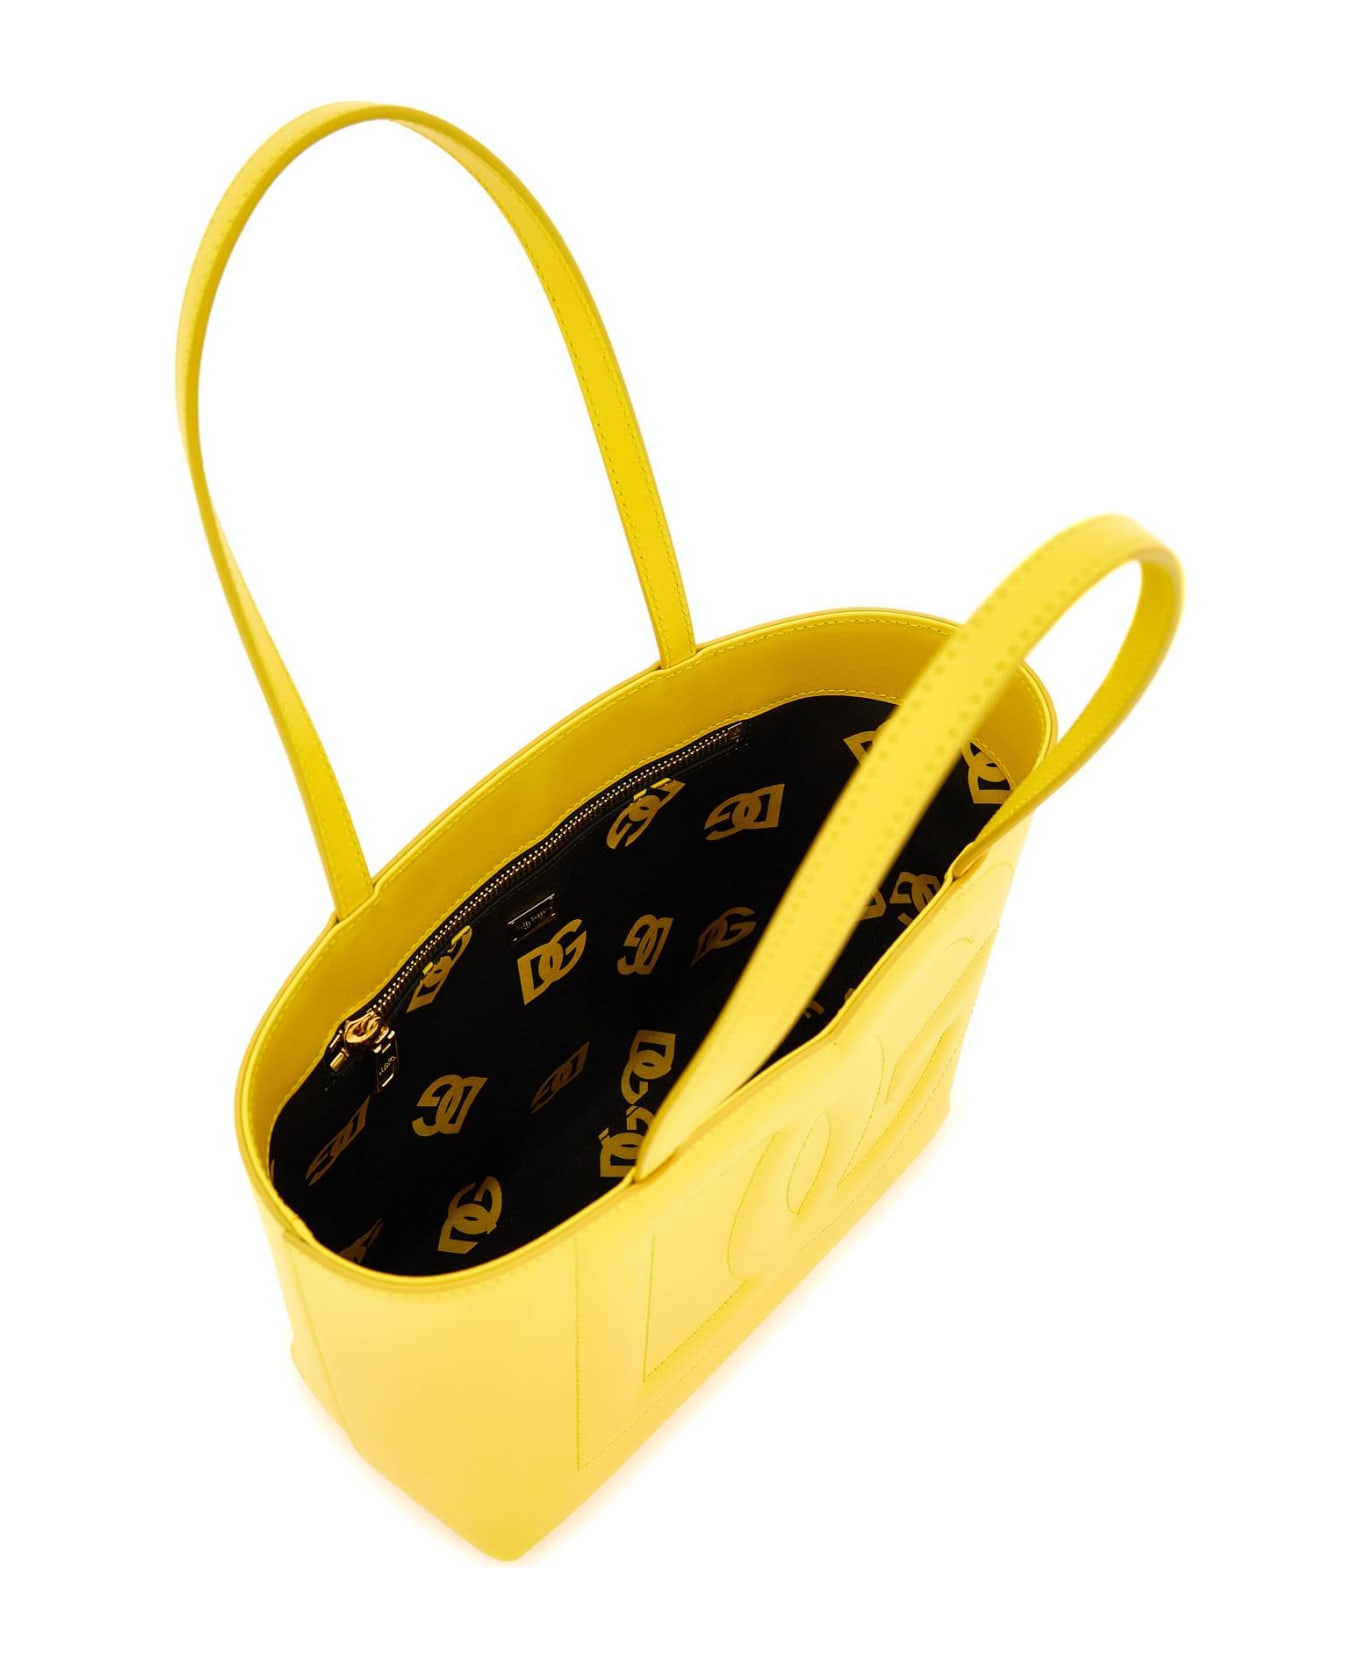 Dolce & Gabbana Logo Shopping Bag - GIALLO ORO (Yellow) トートバッグ